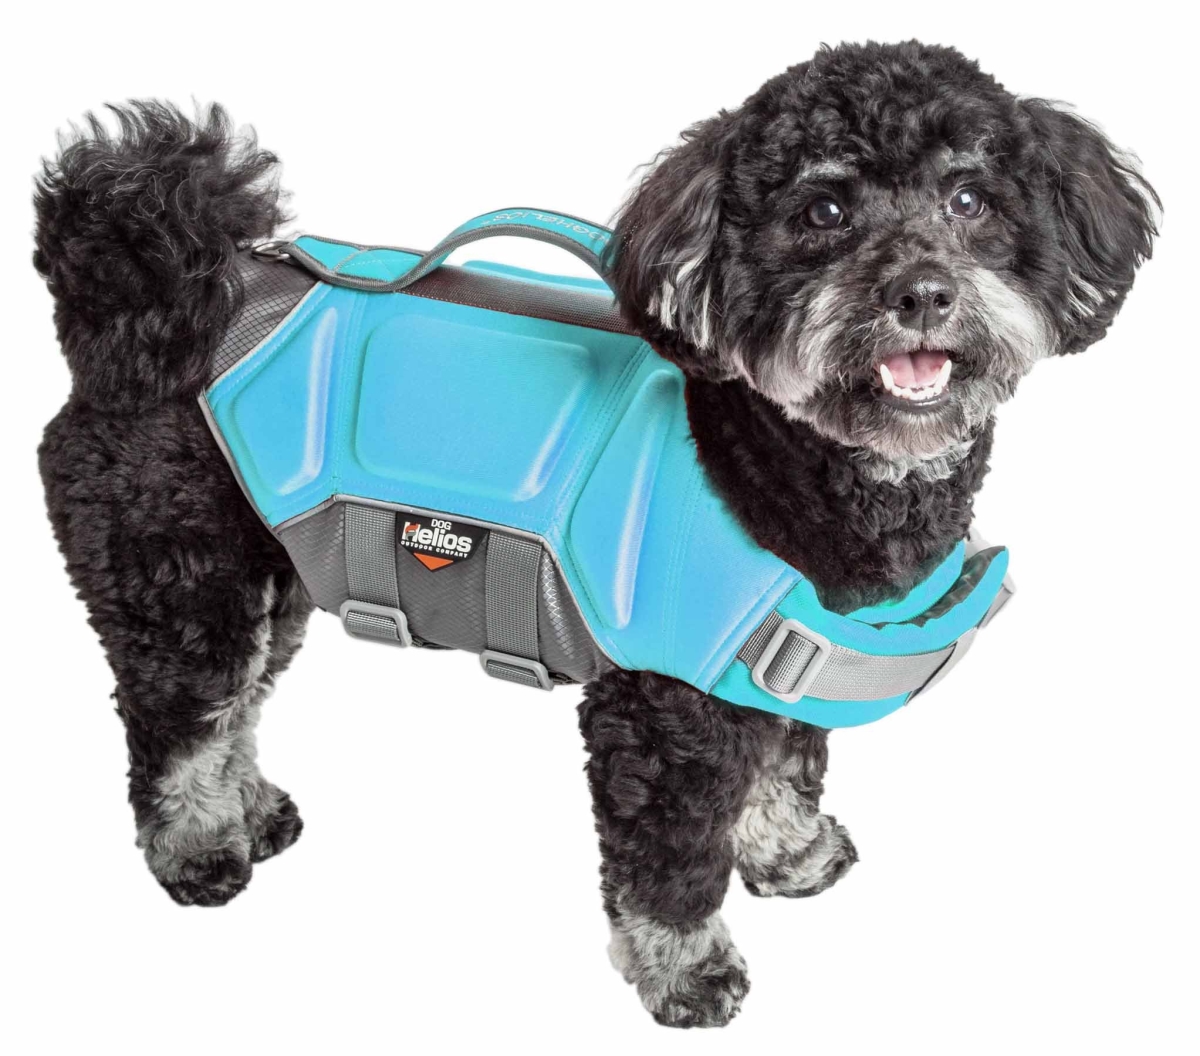 Ha18lblg Tidal Guard Multi-point Strategically-stitched Reflective Pet Dog Life Jacket Vest - Light Blue, Large